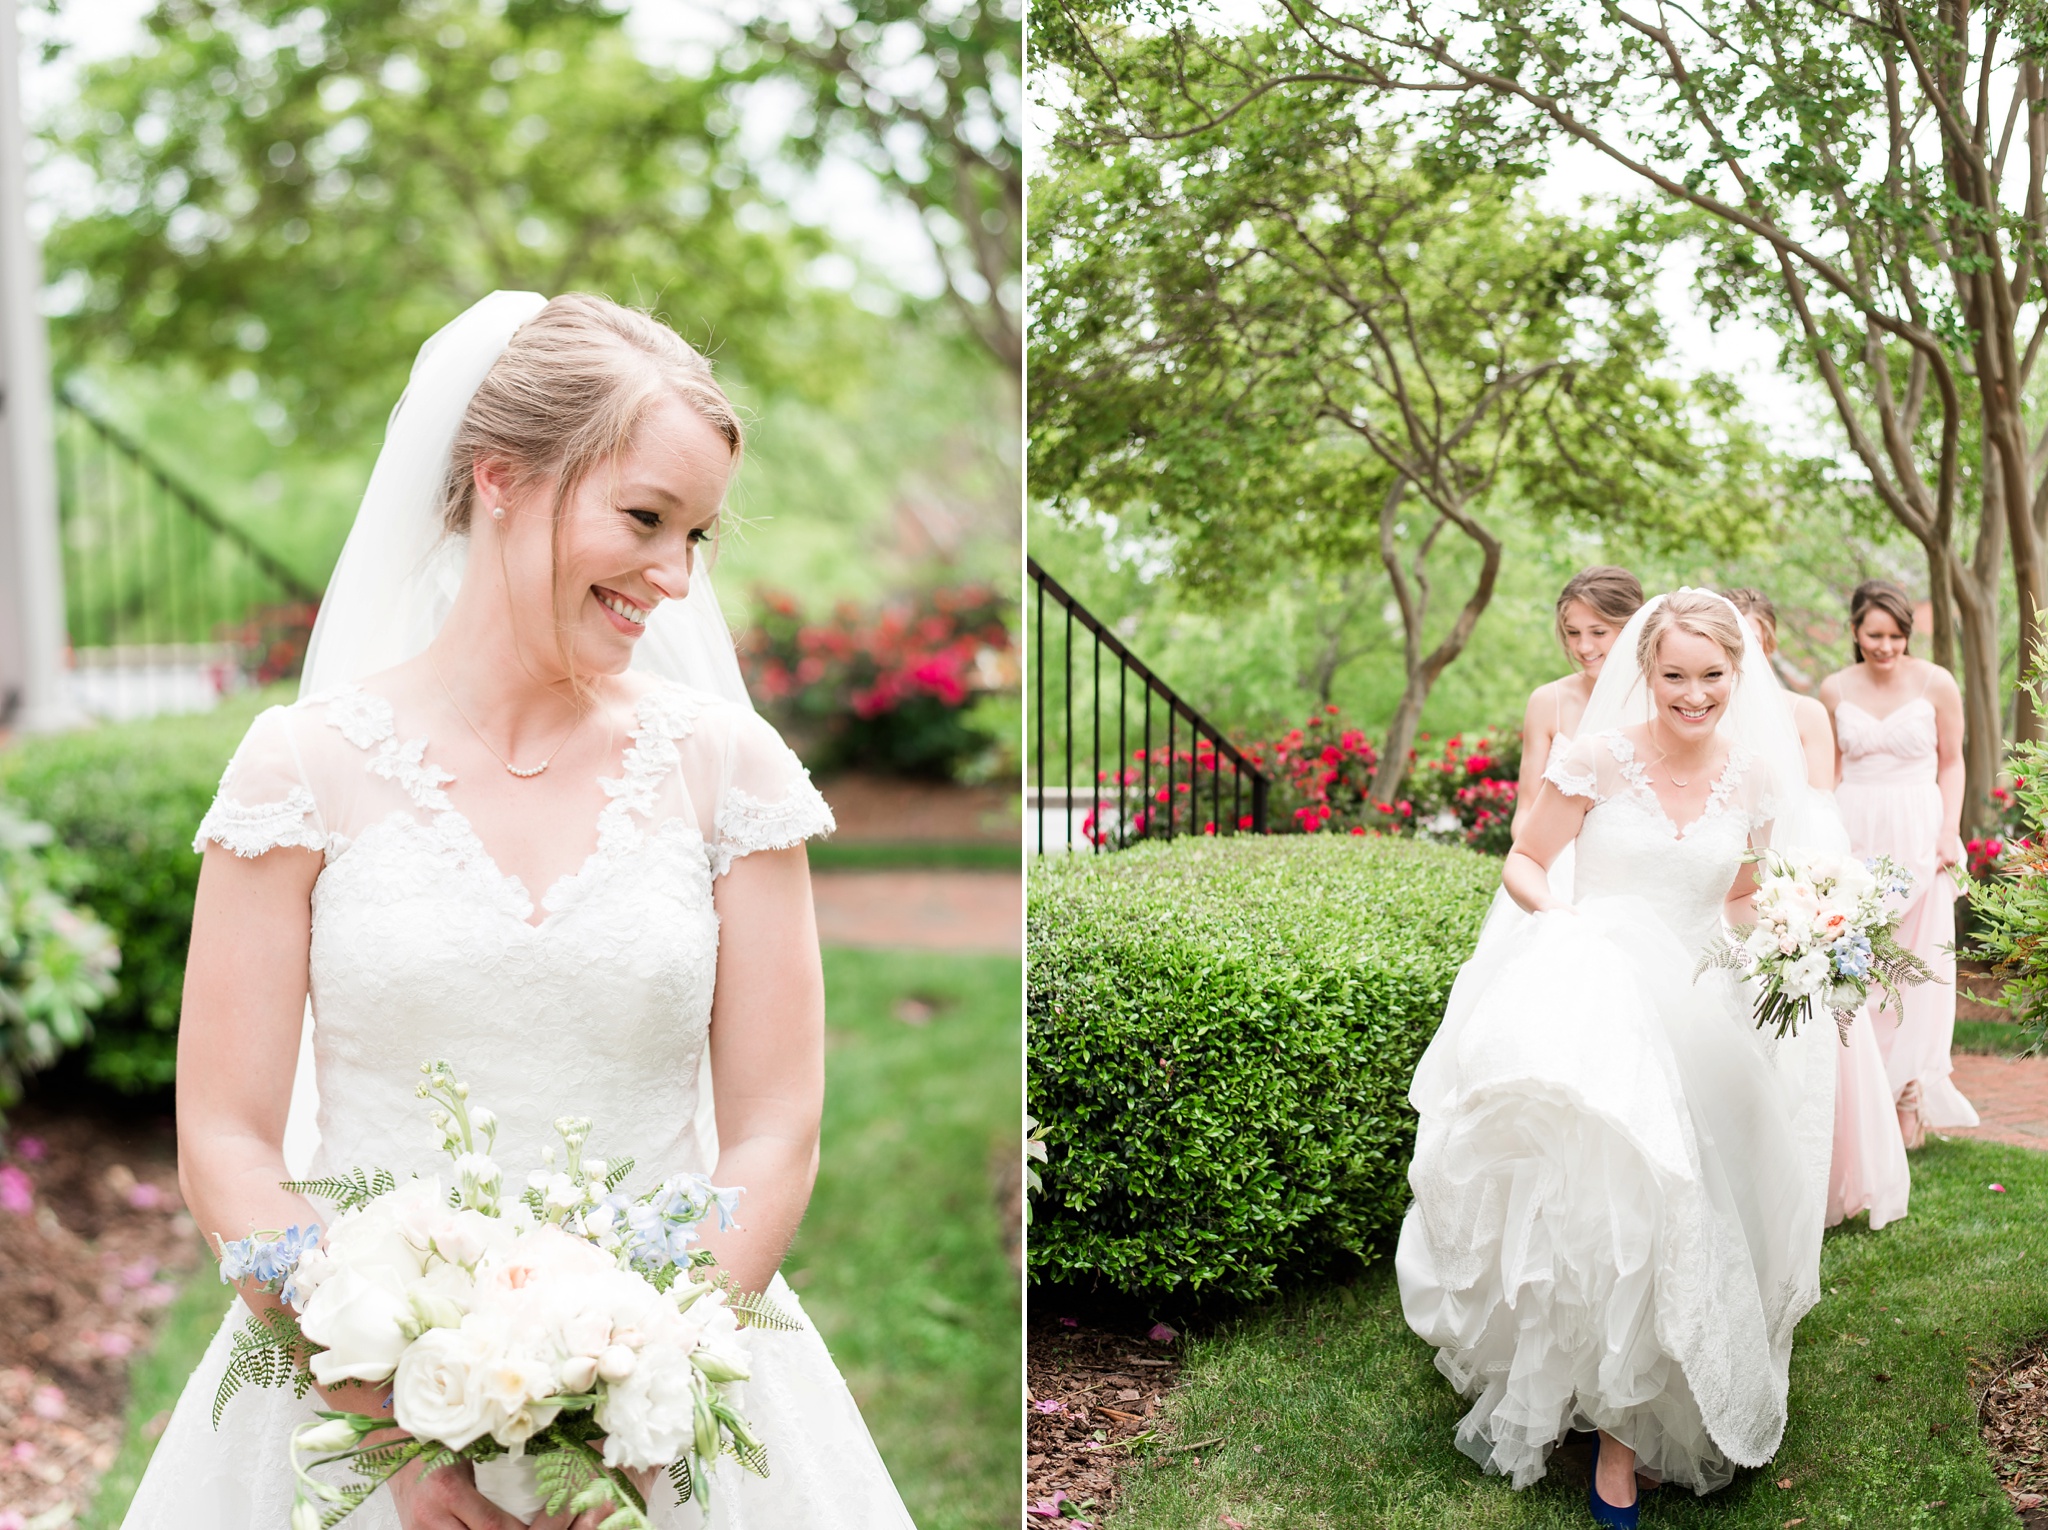 Briarwood Caroline House Blush Spring Garden Wedding | Birmingham Alabama Wedding Photographers_0025.jpg